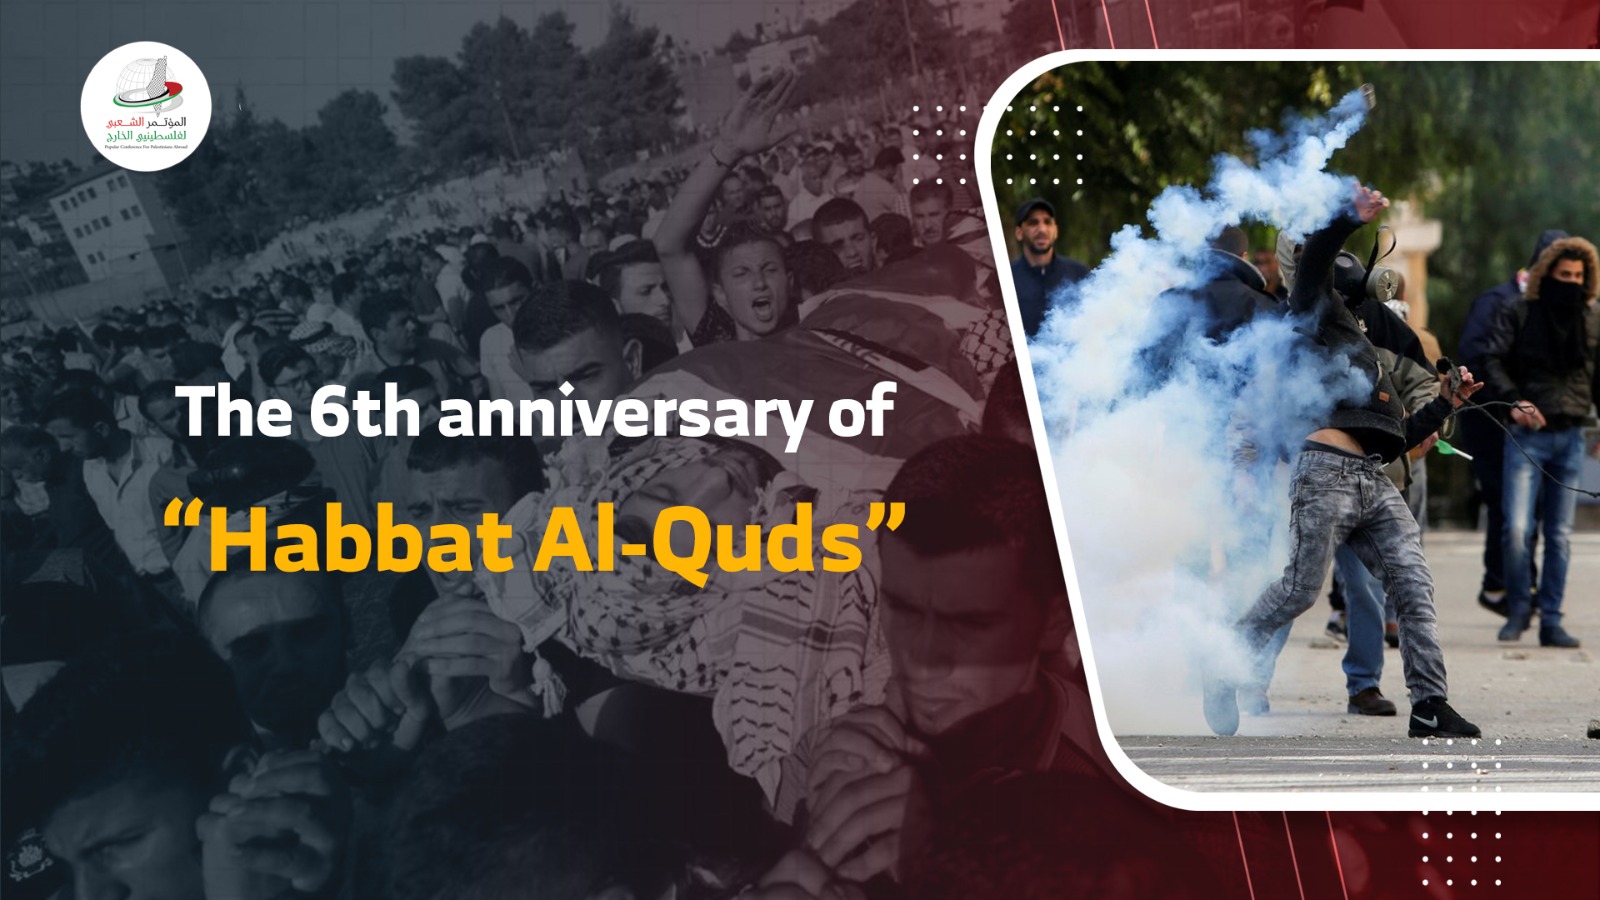 The 6th anniversary of “Habbat Al-Quds”